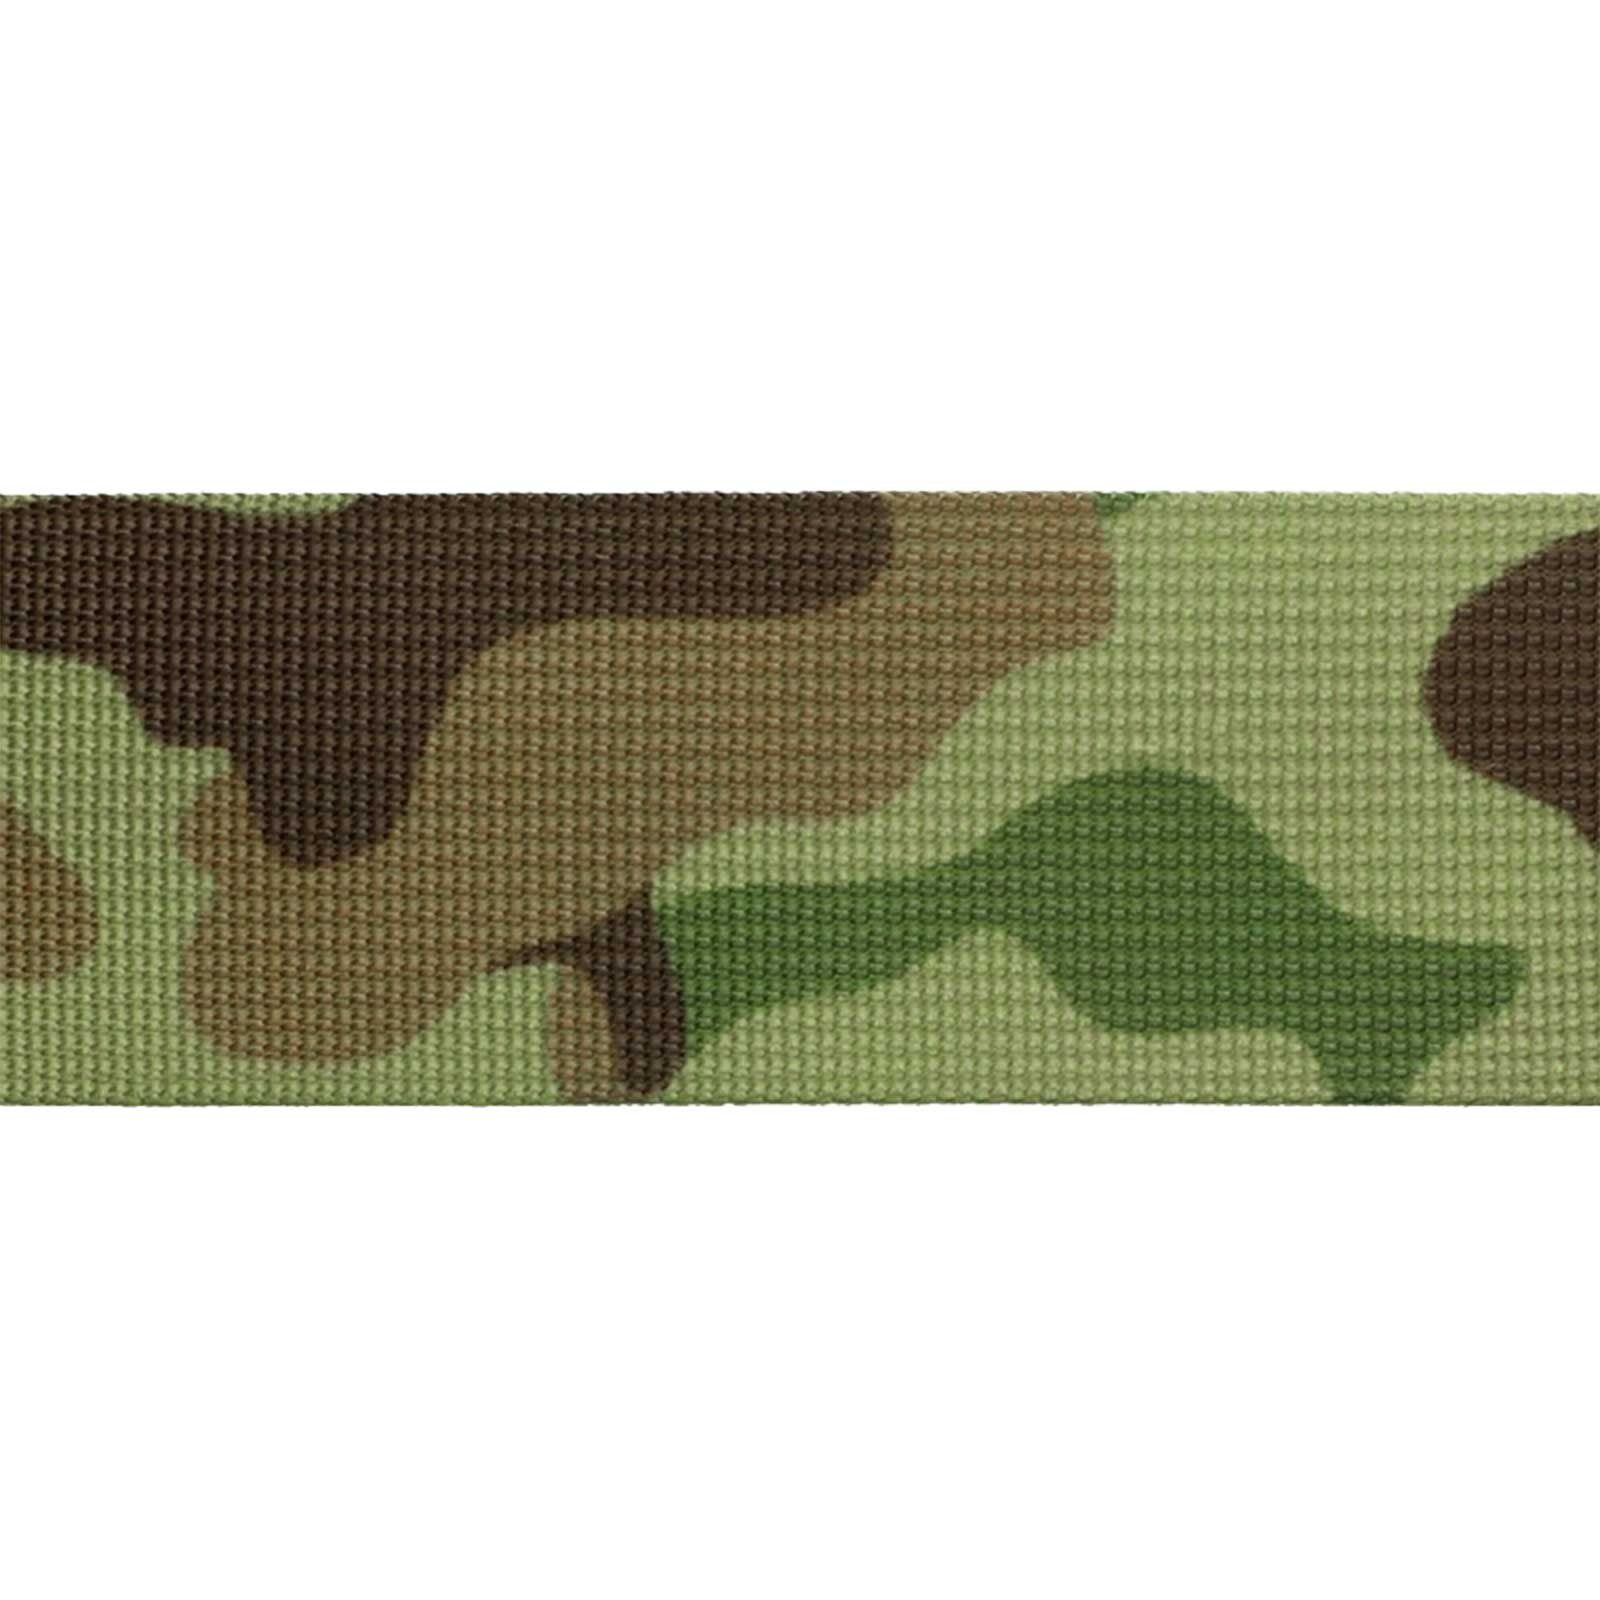 Design im camouflage Rollladengurt, maDDma 50m Tarnmuster Gurtband